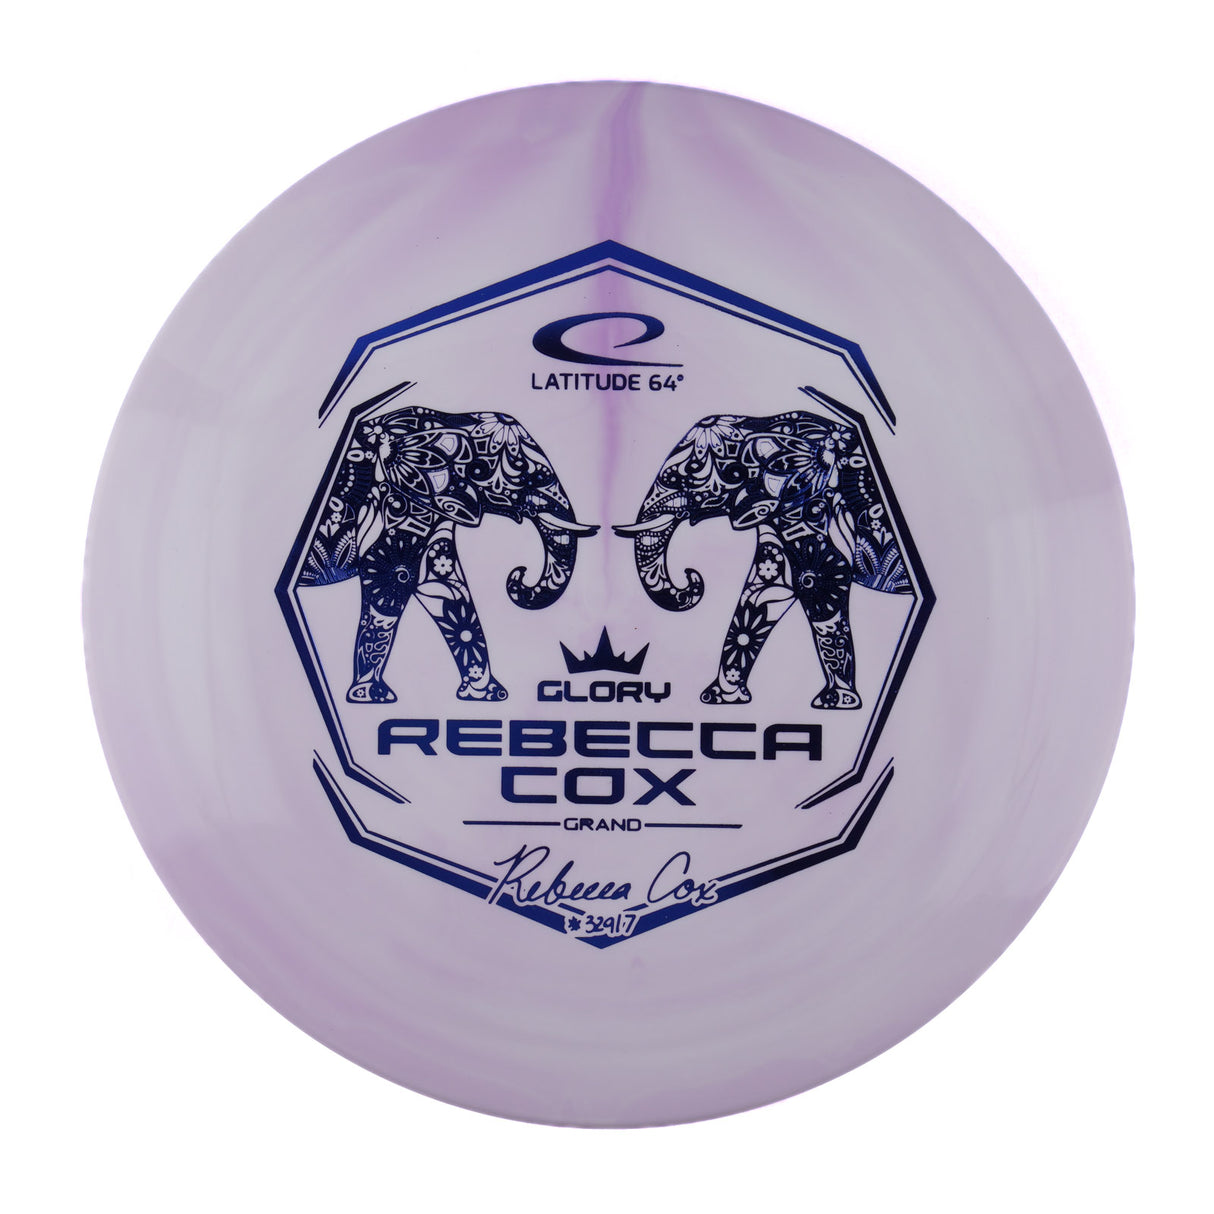 Latitude 64 Glory - Rebecca Cox Royal Grand 176g | Style 0009